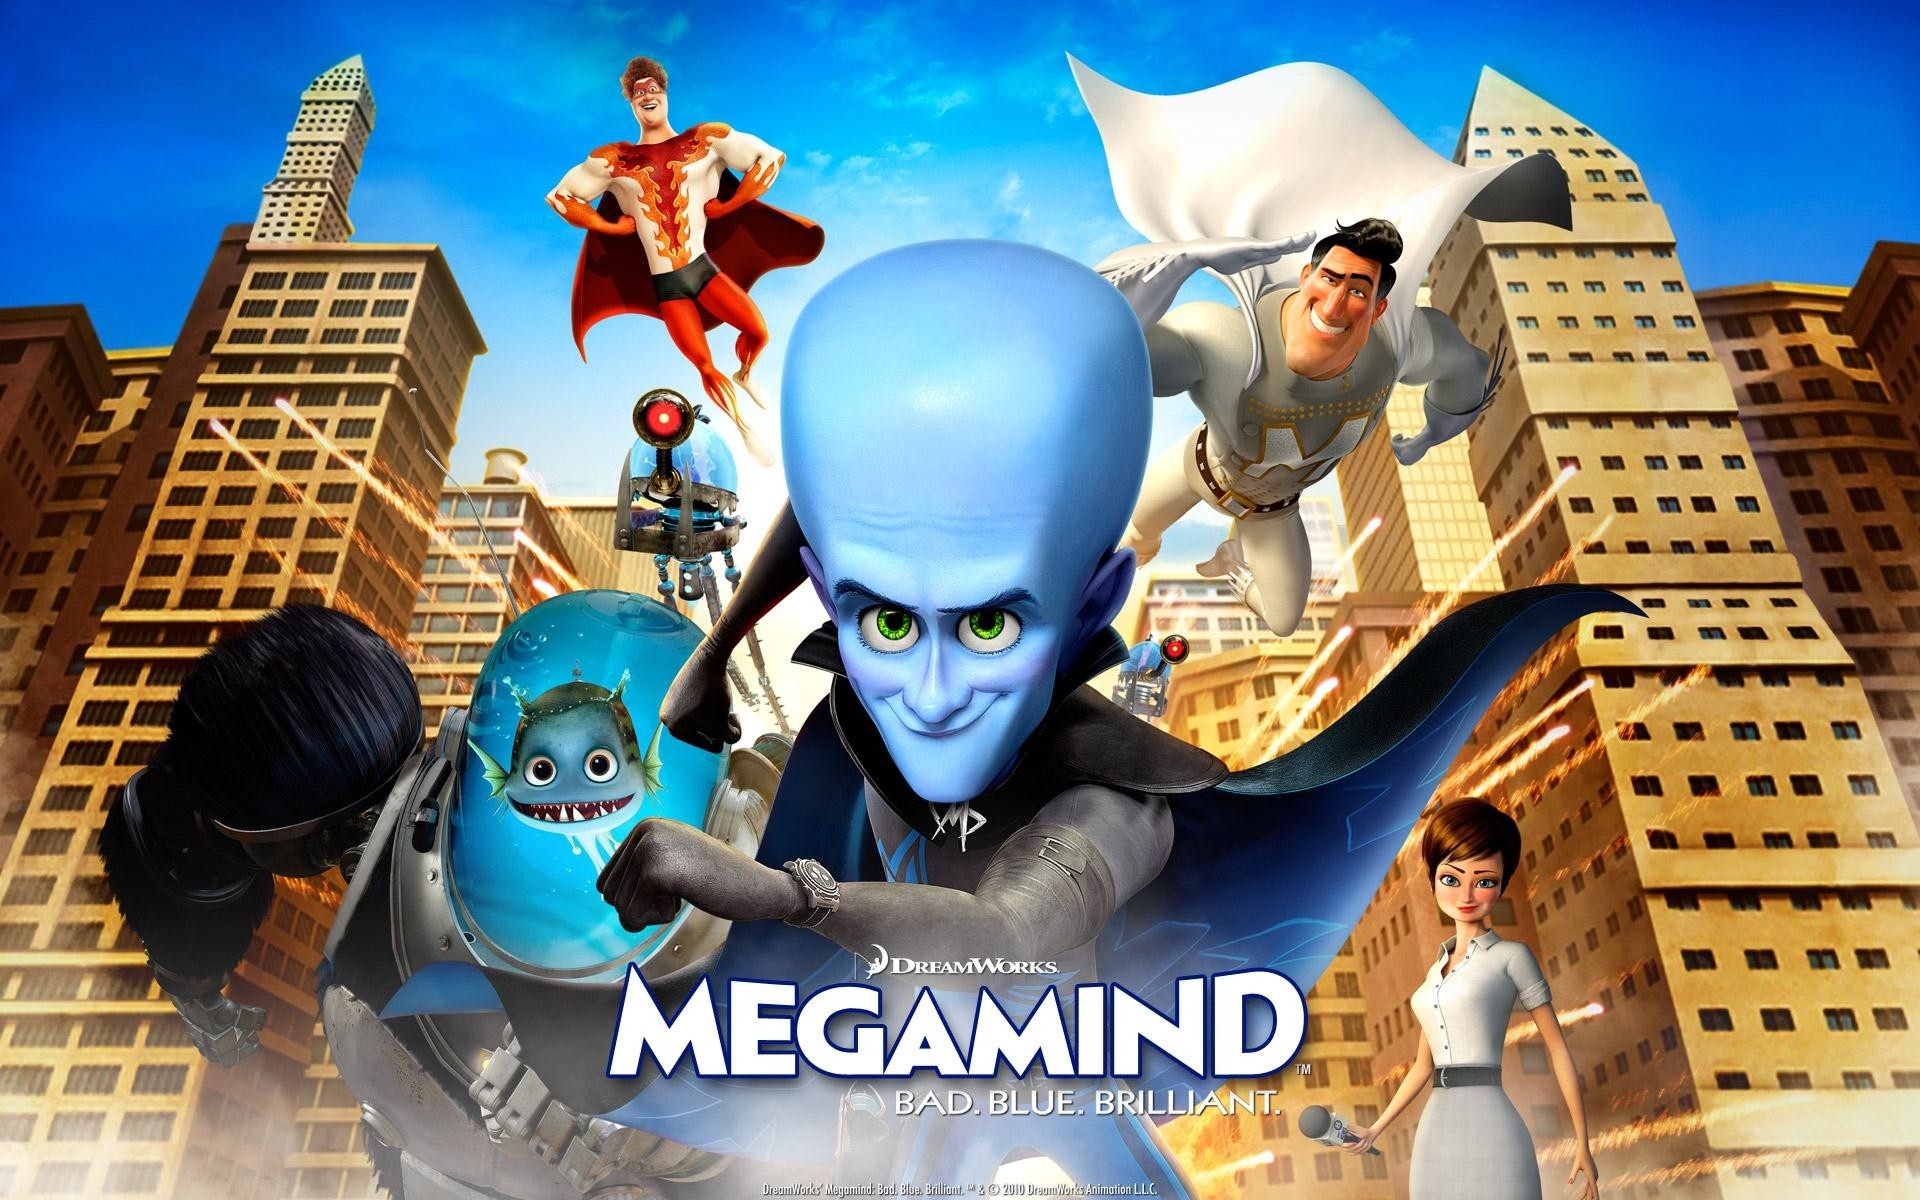 General 1920x1200 Megamind animated movies 2010 (Year) movies digital art